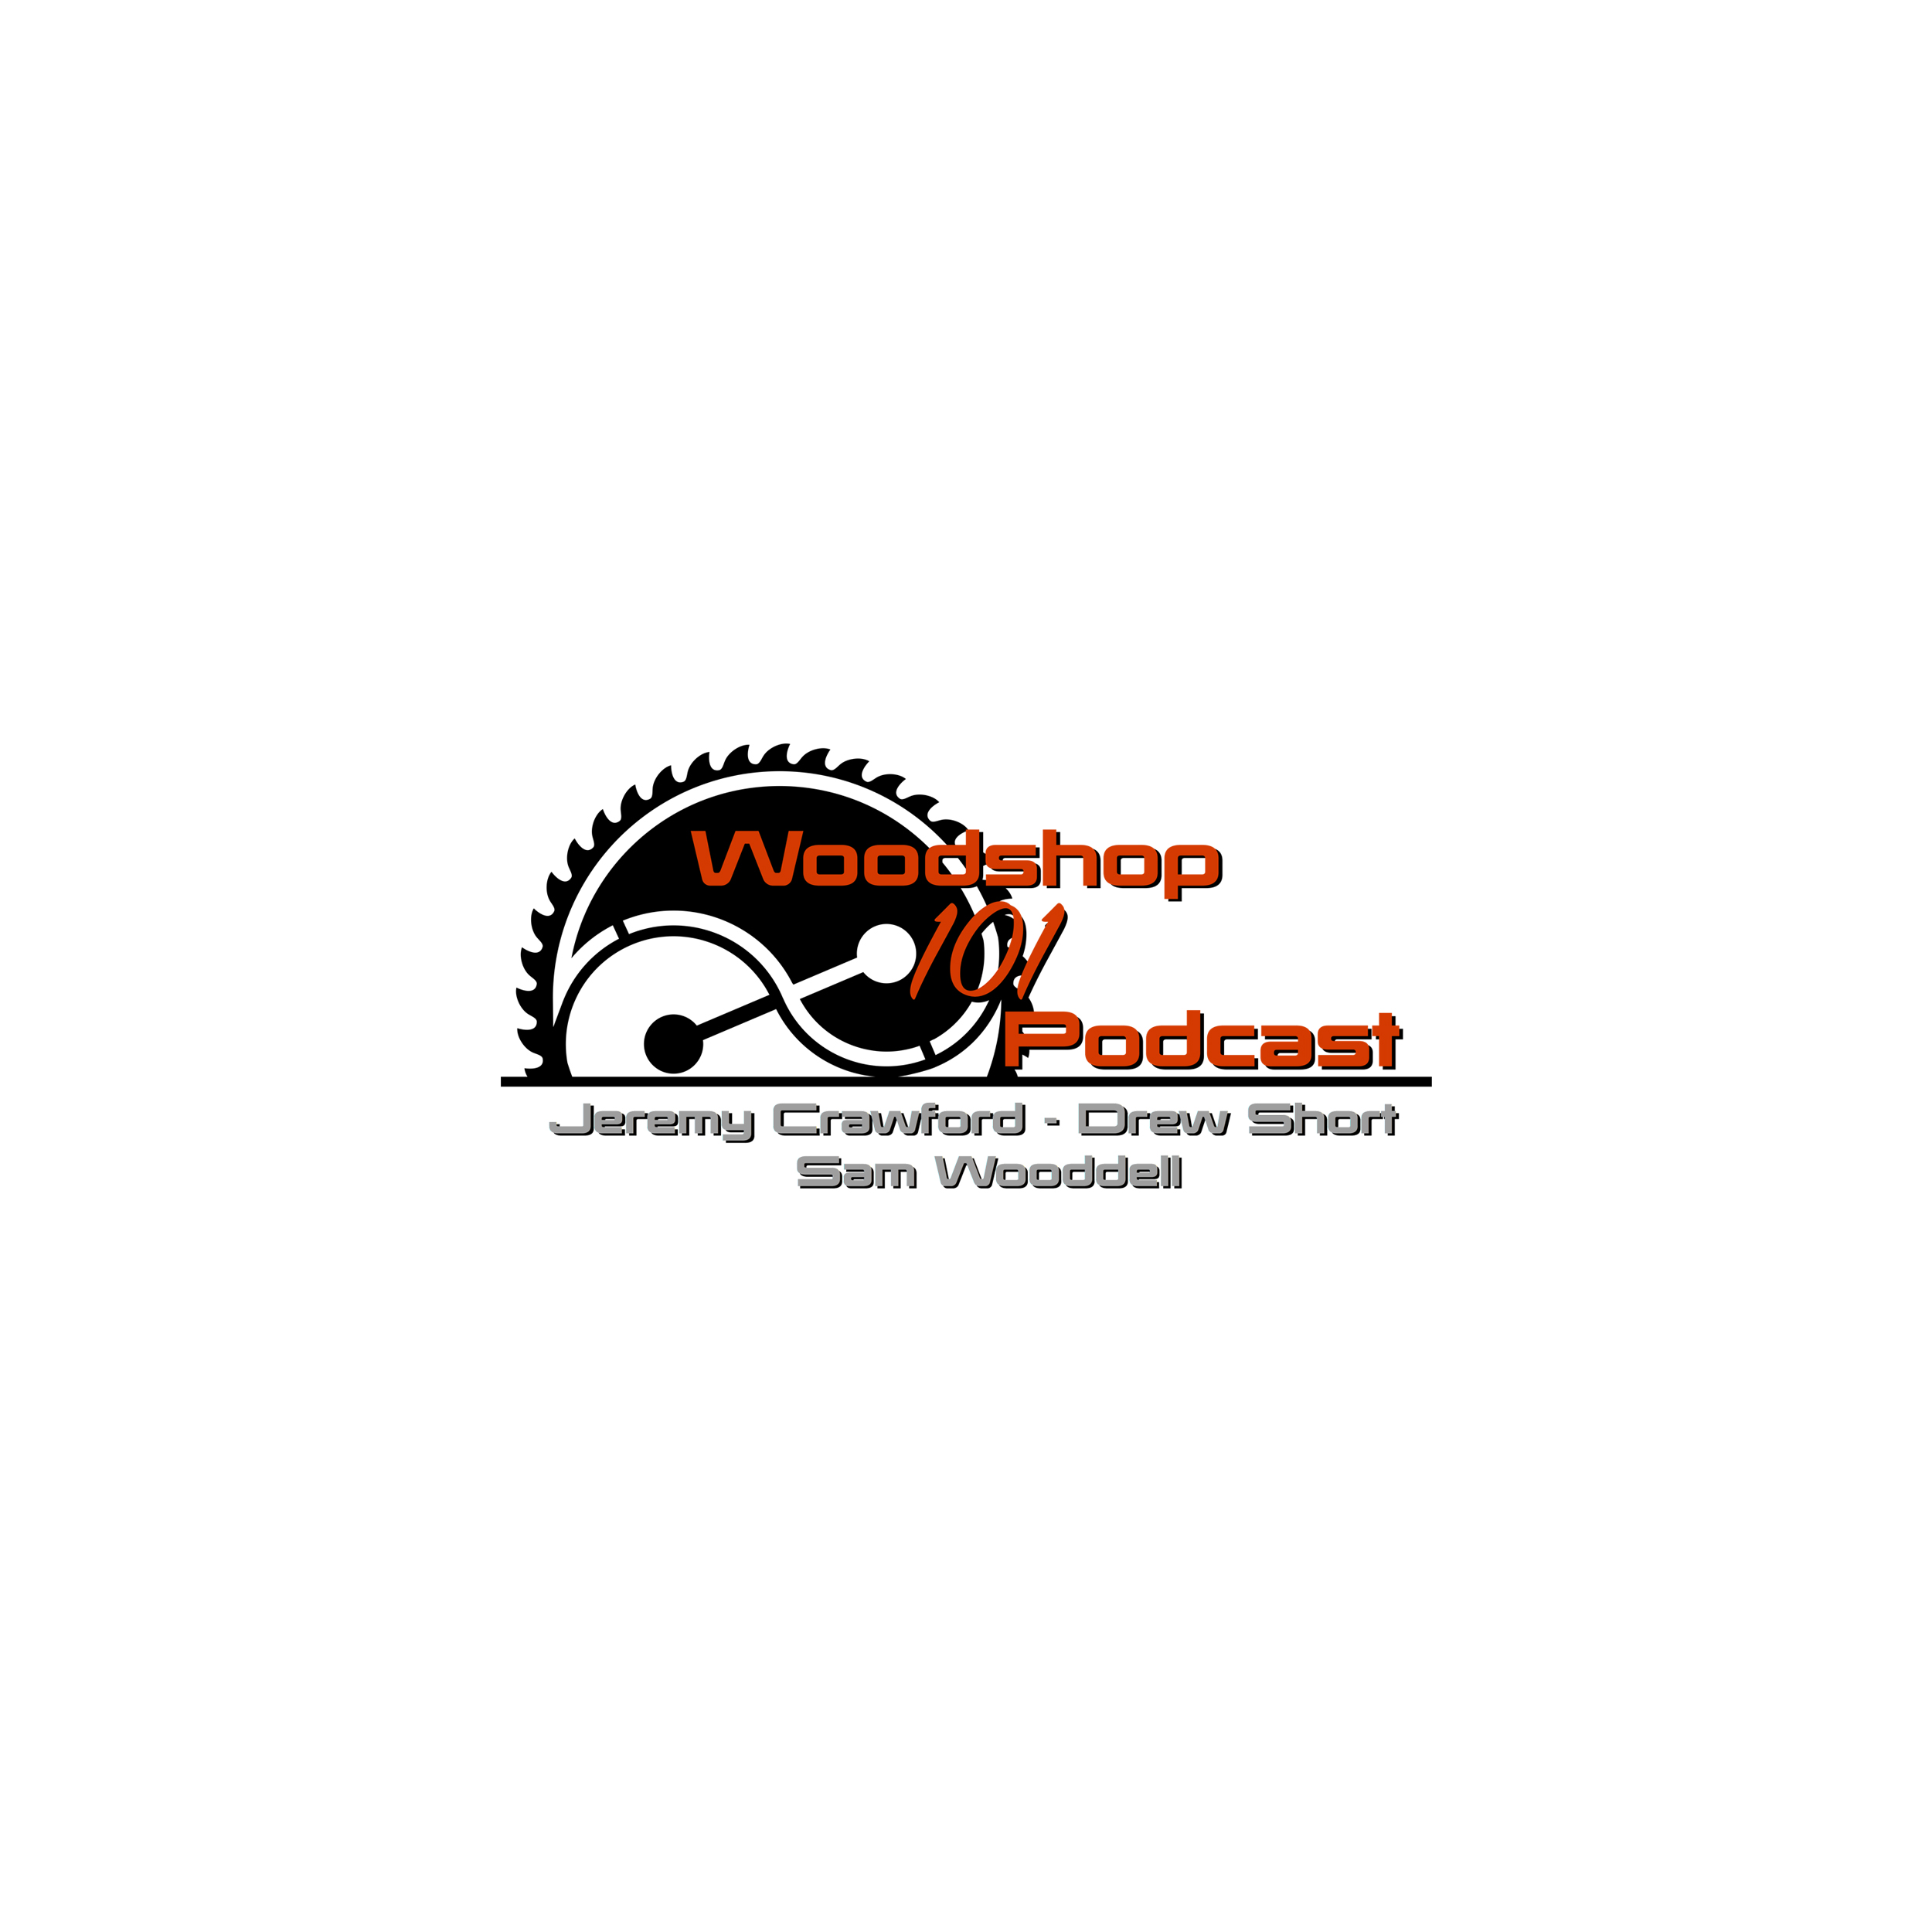 Woodshop 101 Podcast Landing Page — Countryside Workshop